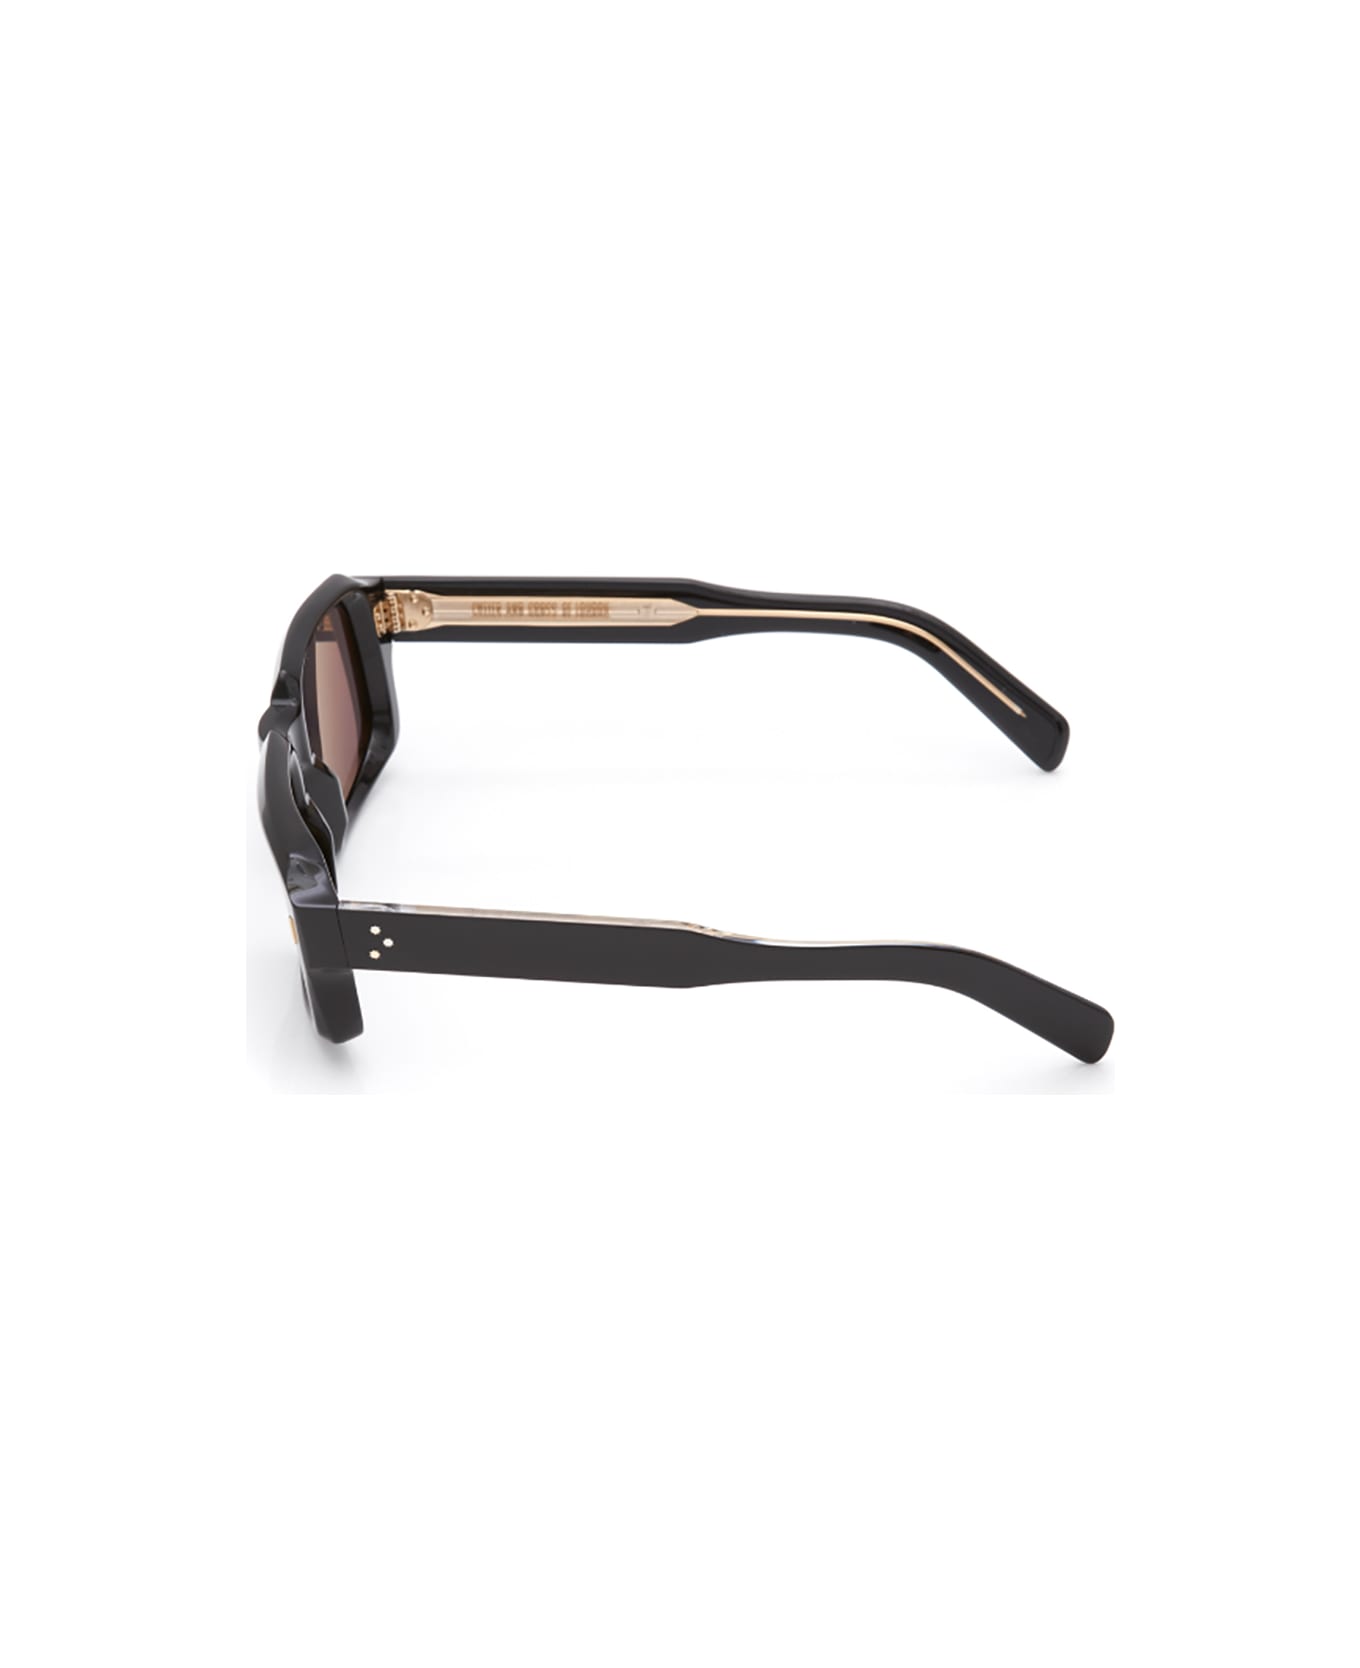 Cutler and Gross 9495 Sunglasses - Black サングラス